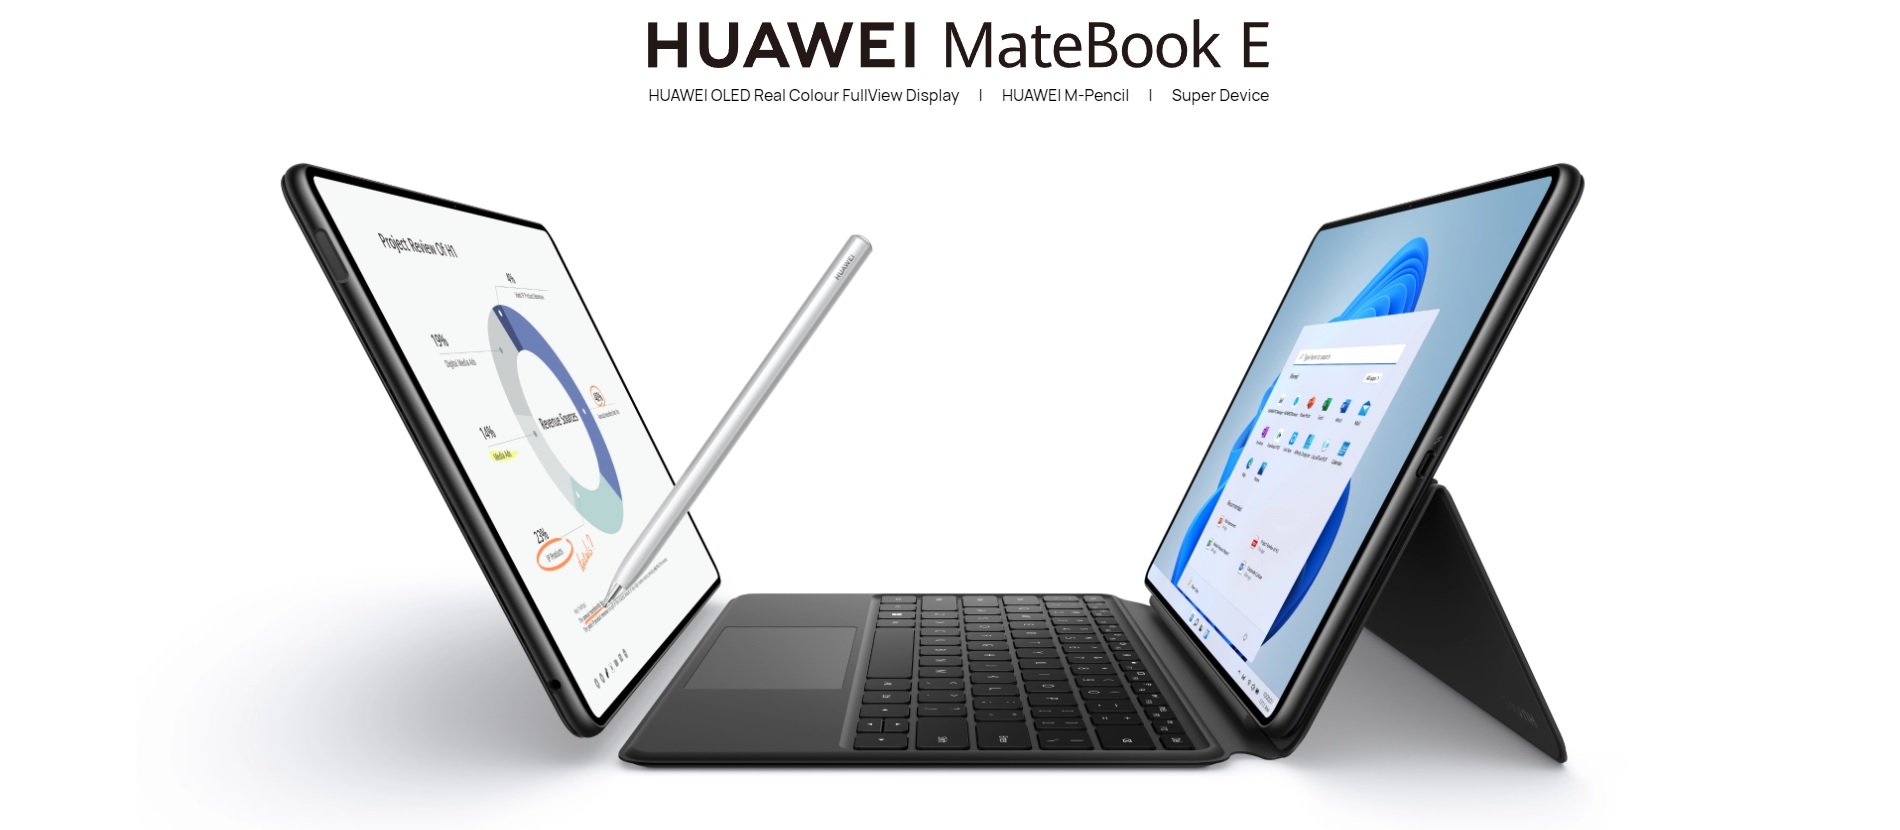 Huawei MateBook E laptop tablet hybrid